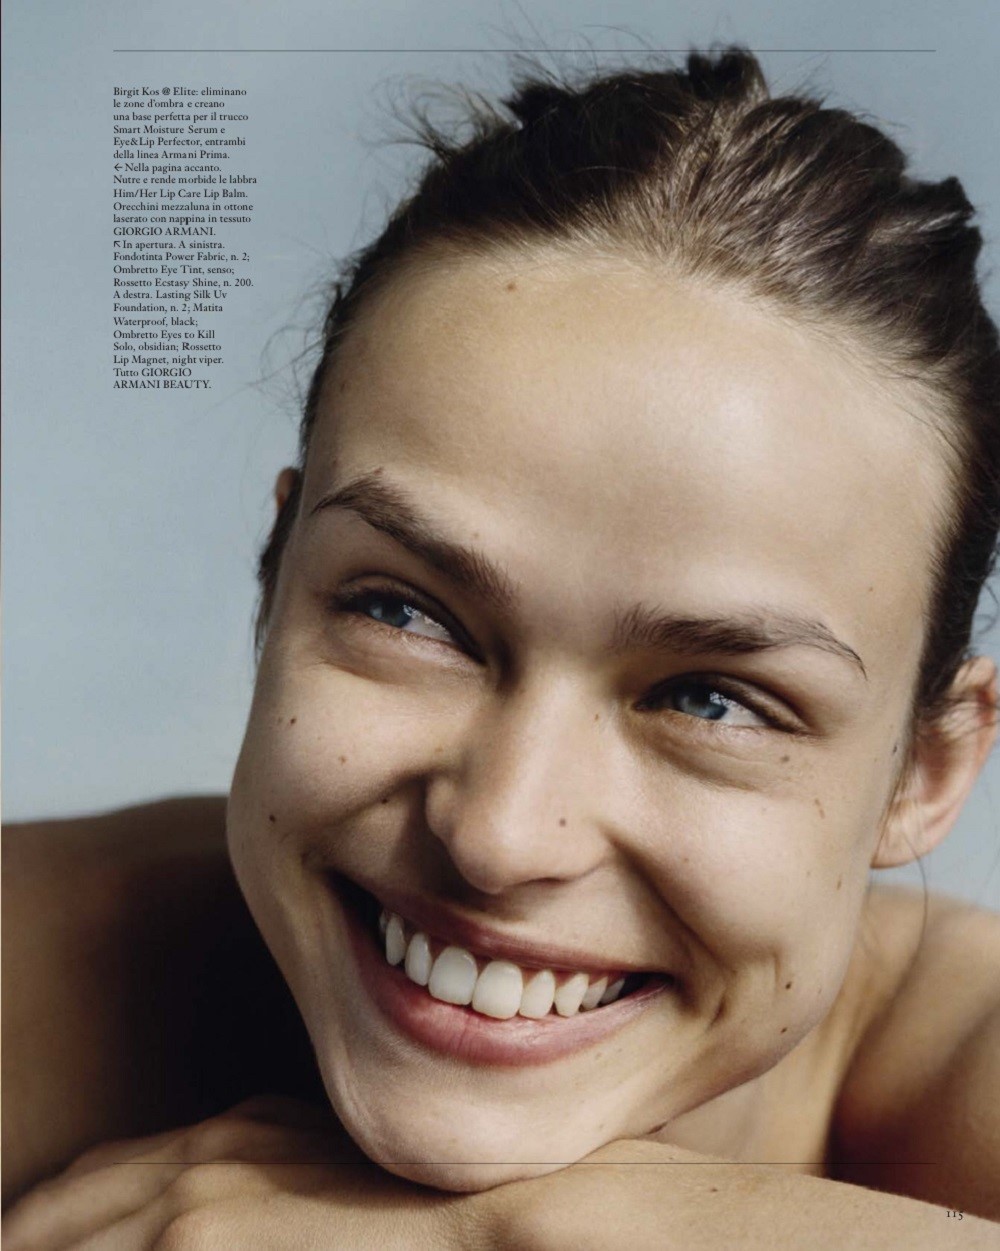 Birgit Kos shot by Paul Wetherell for Vogue Italia June 2018 Issue-12jpg.jpg